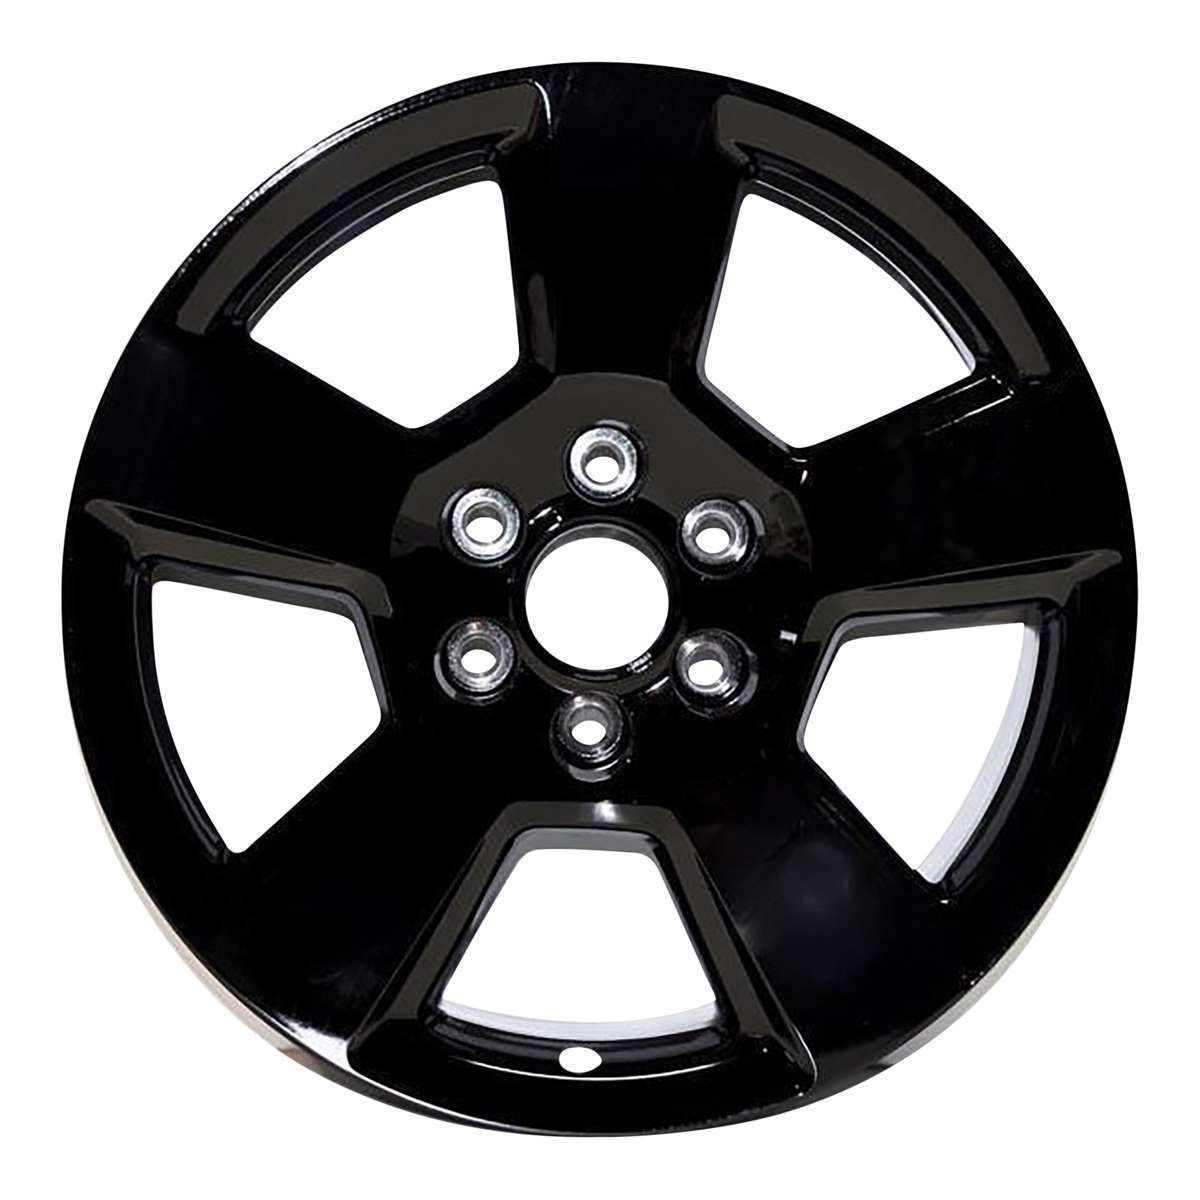 2021 GMC Yukon XL New 20" Replacement Wheel Rim RW5652GB